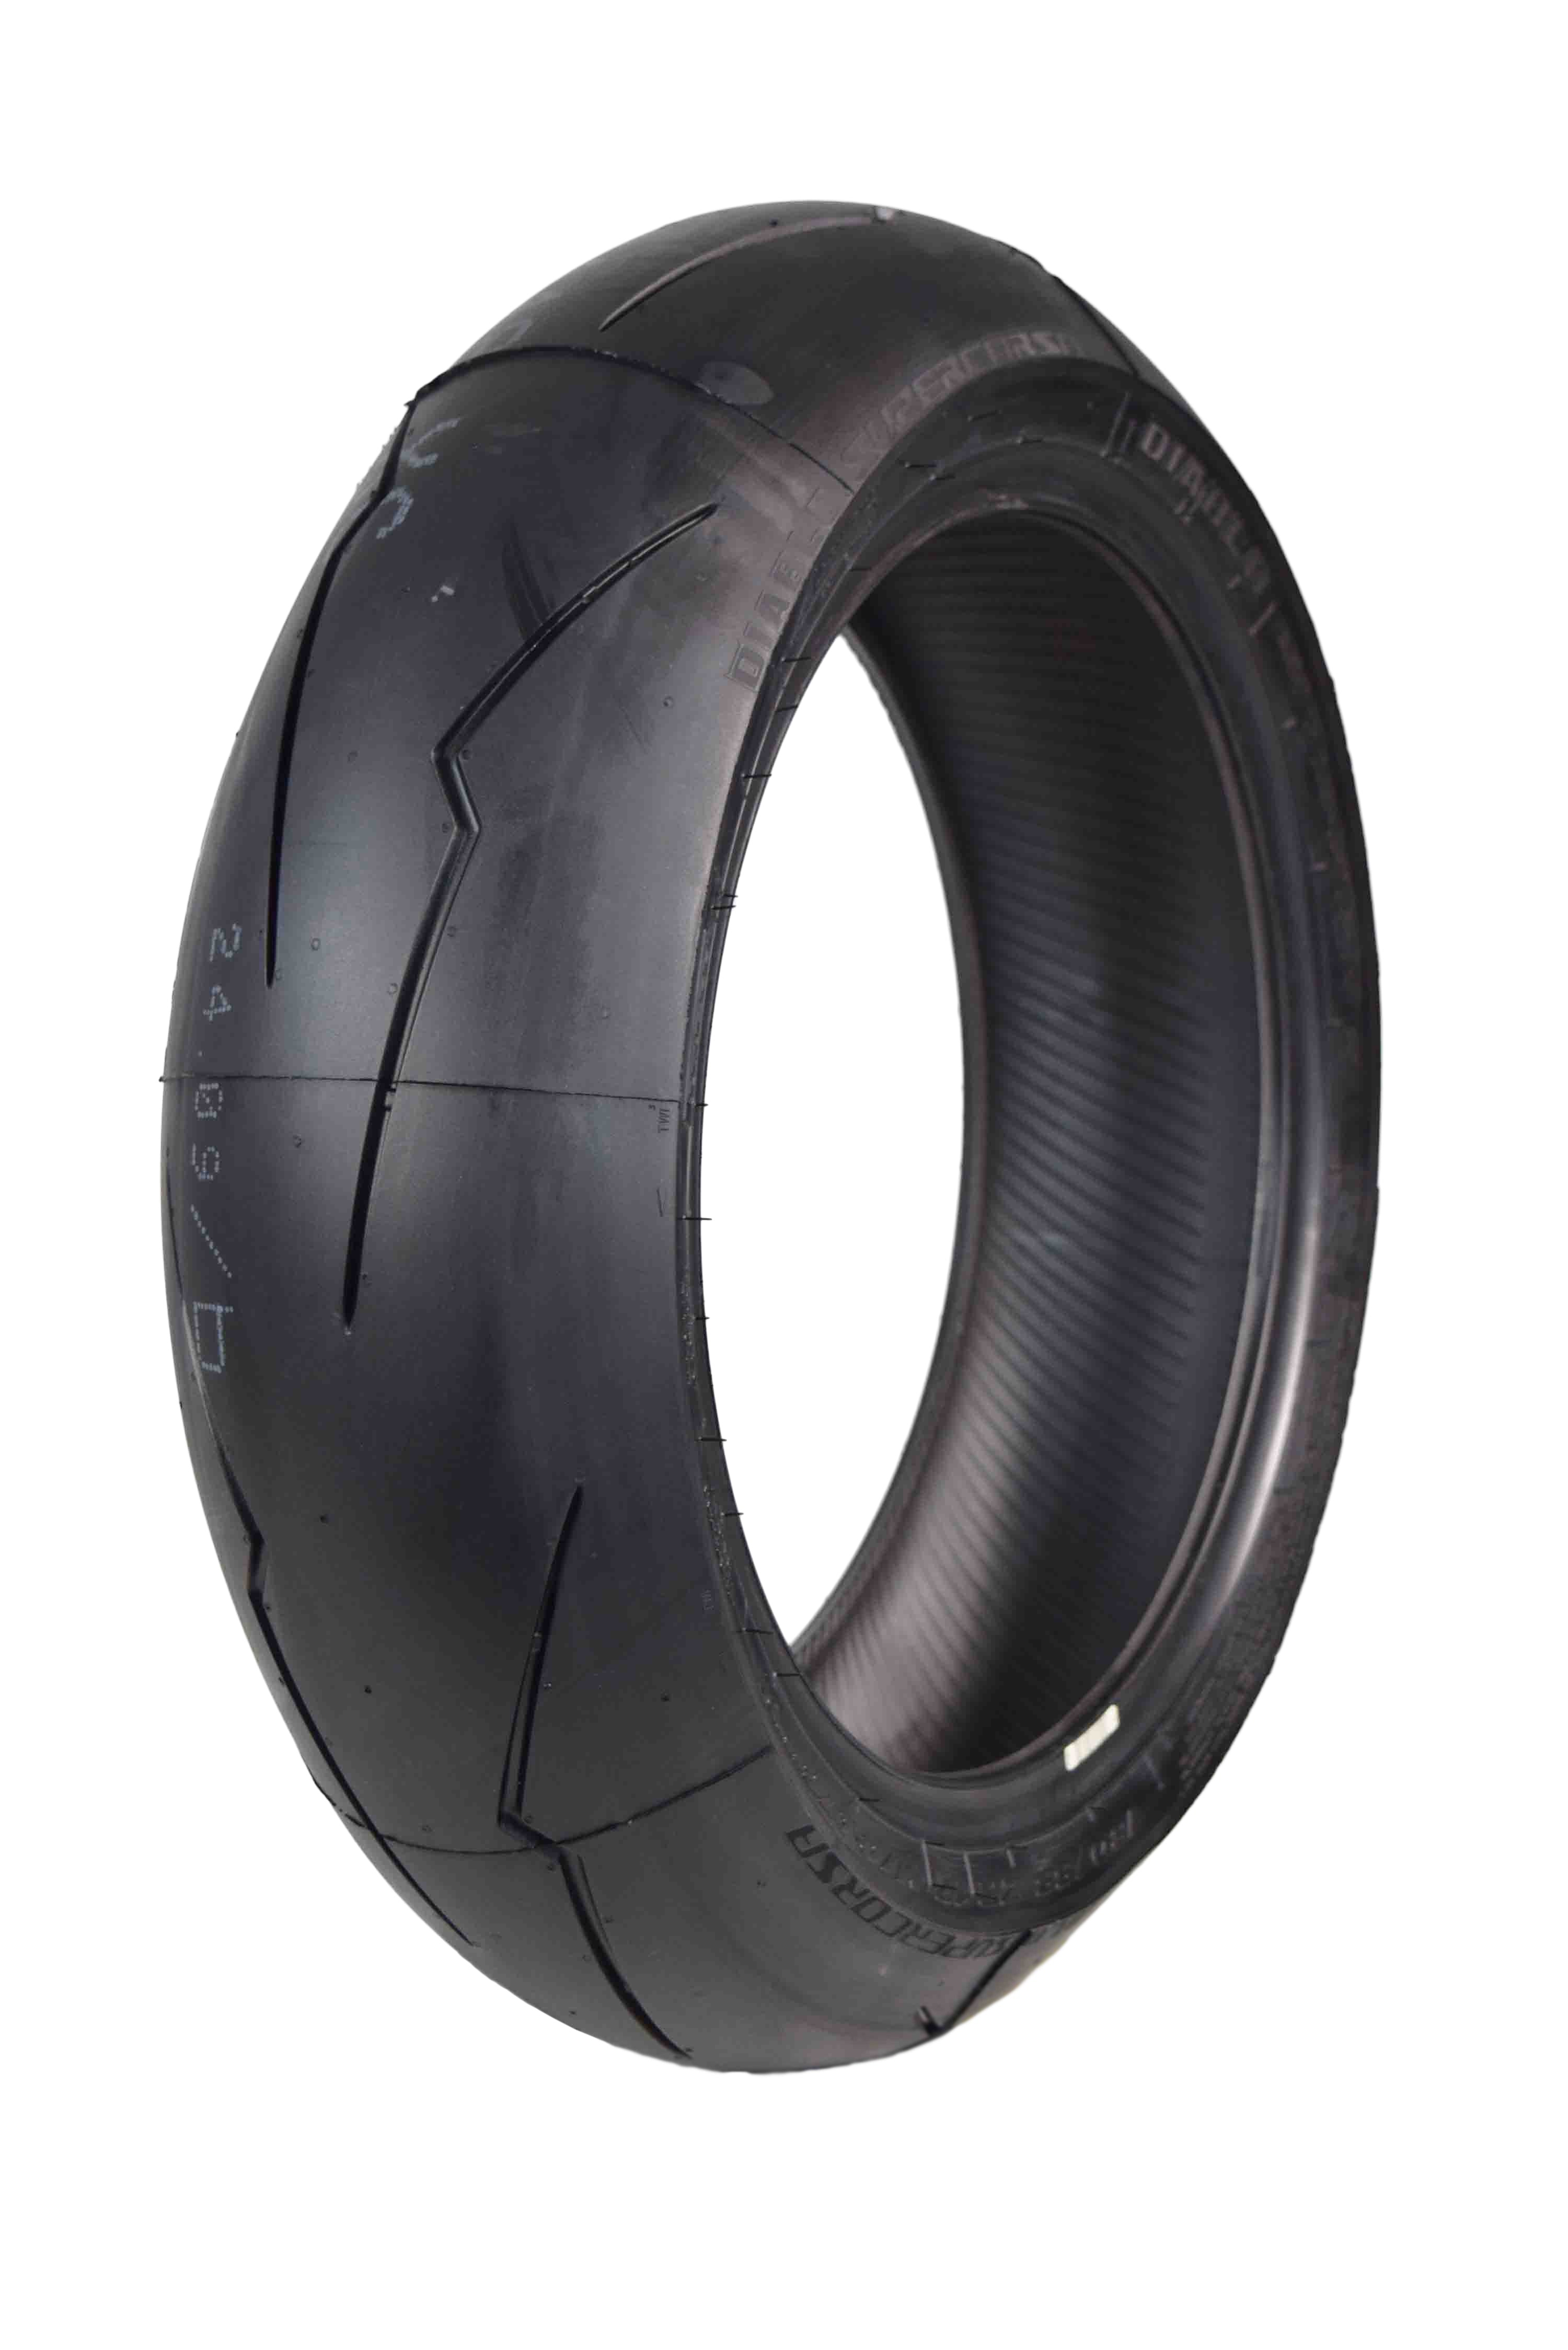 Pirelli-Tire-180-55ZR17-SUPER-CORSA-V2-Radial-Motorcycle-Rear-Tire-180-55-17-image-2